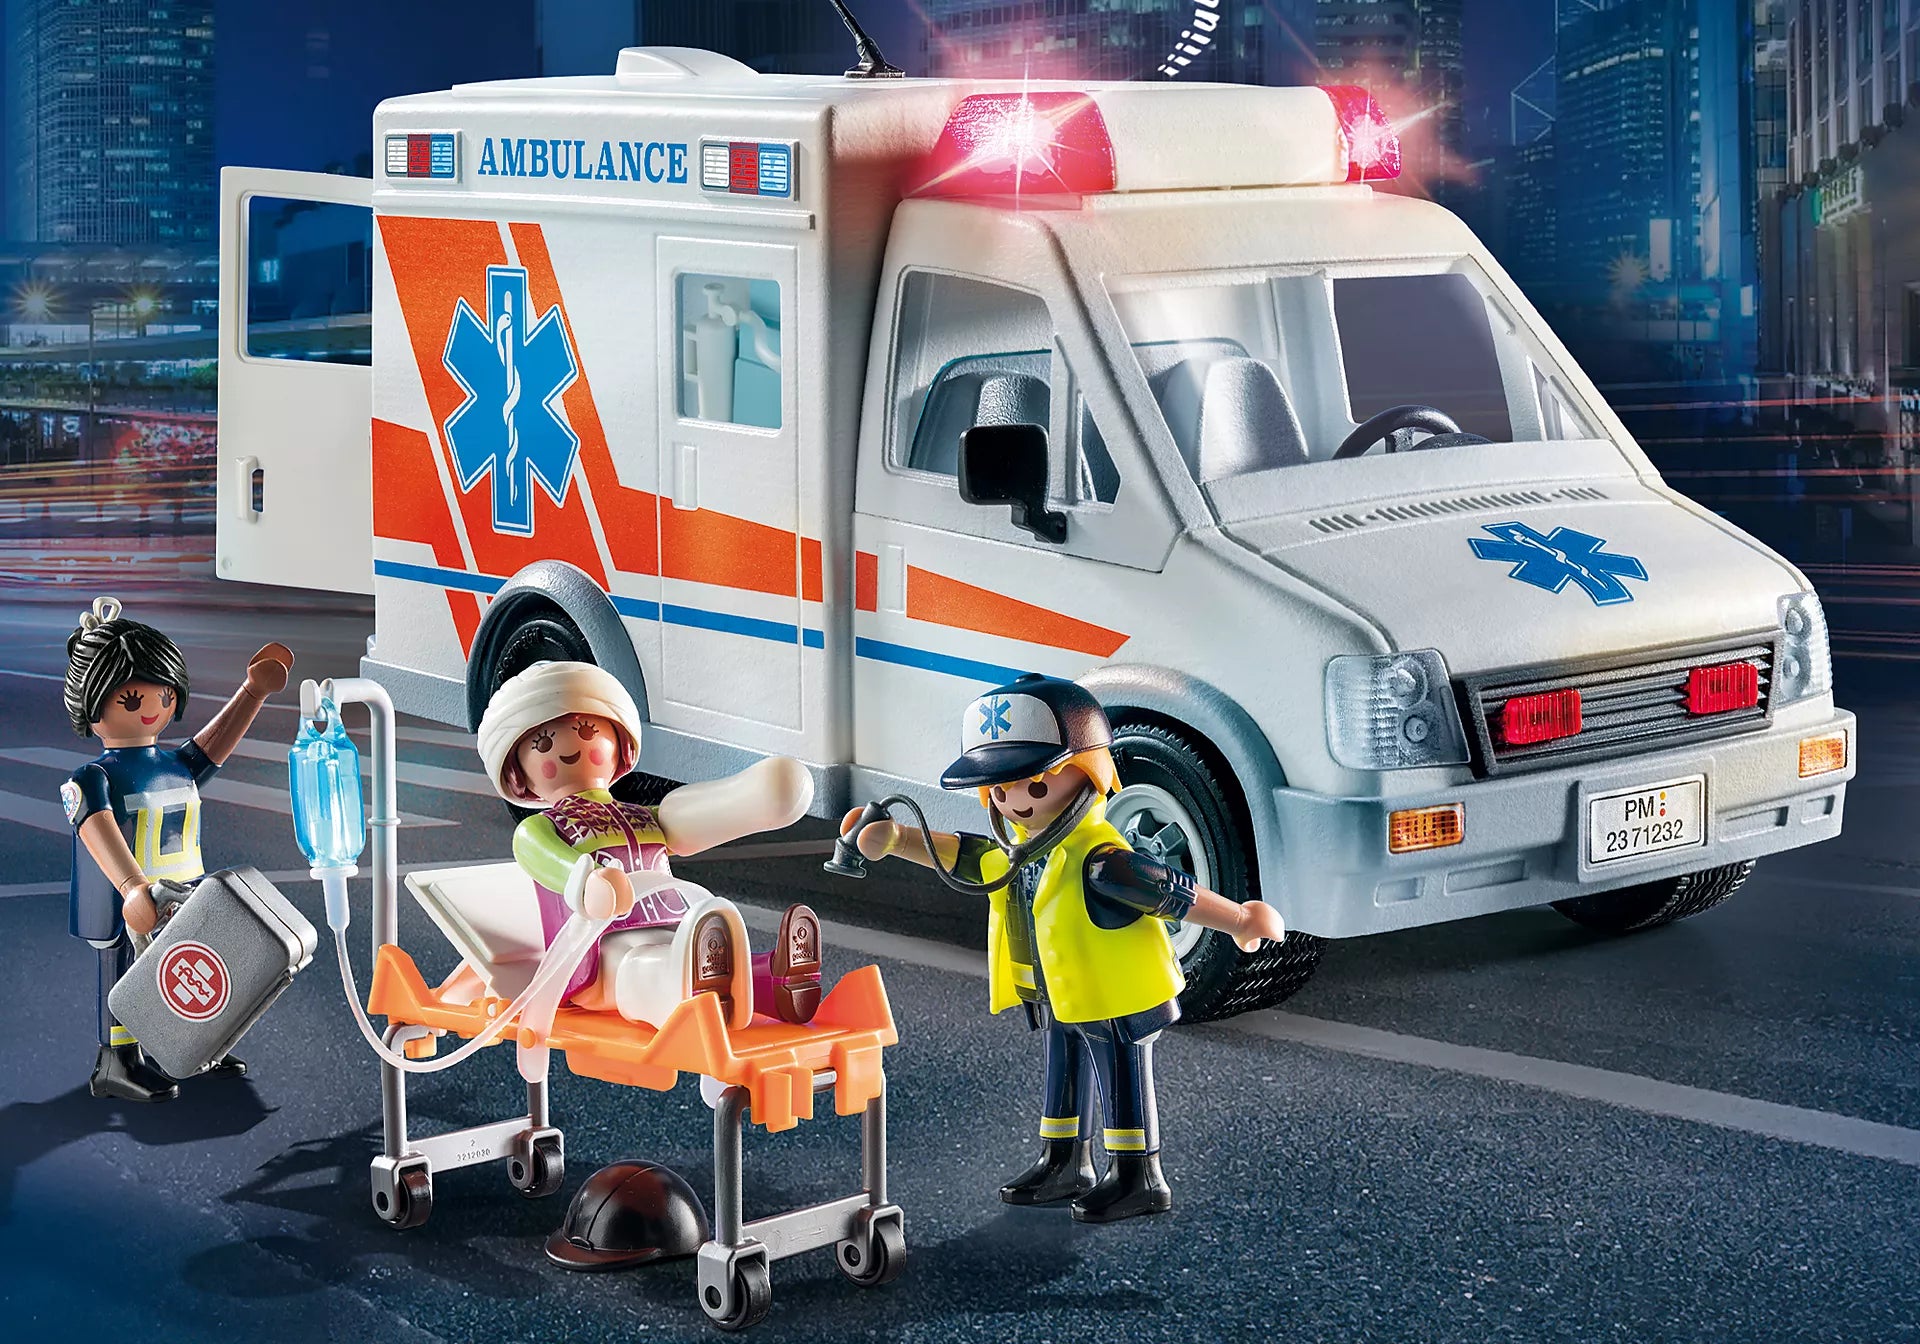 Playmobil City Action – Ambulance (71232)